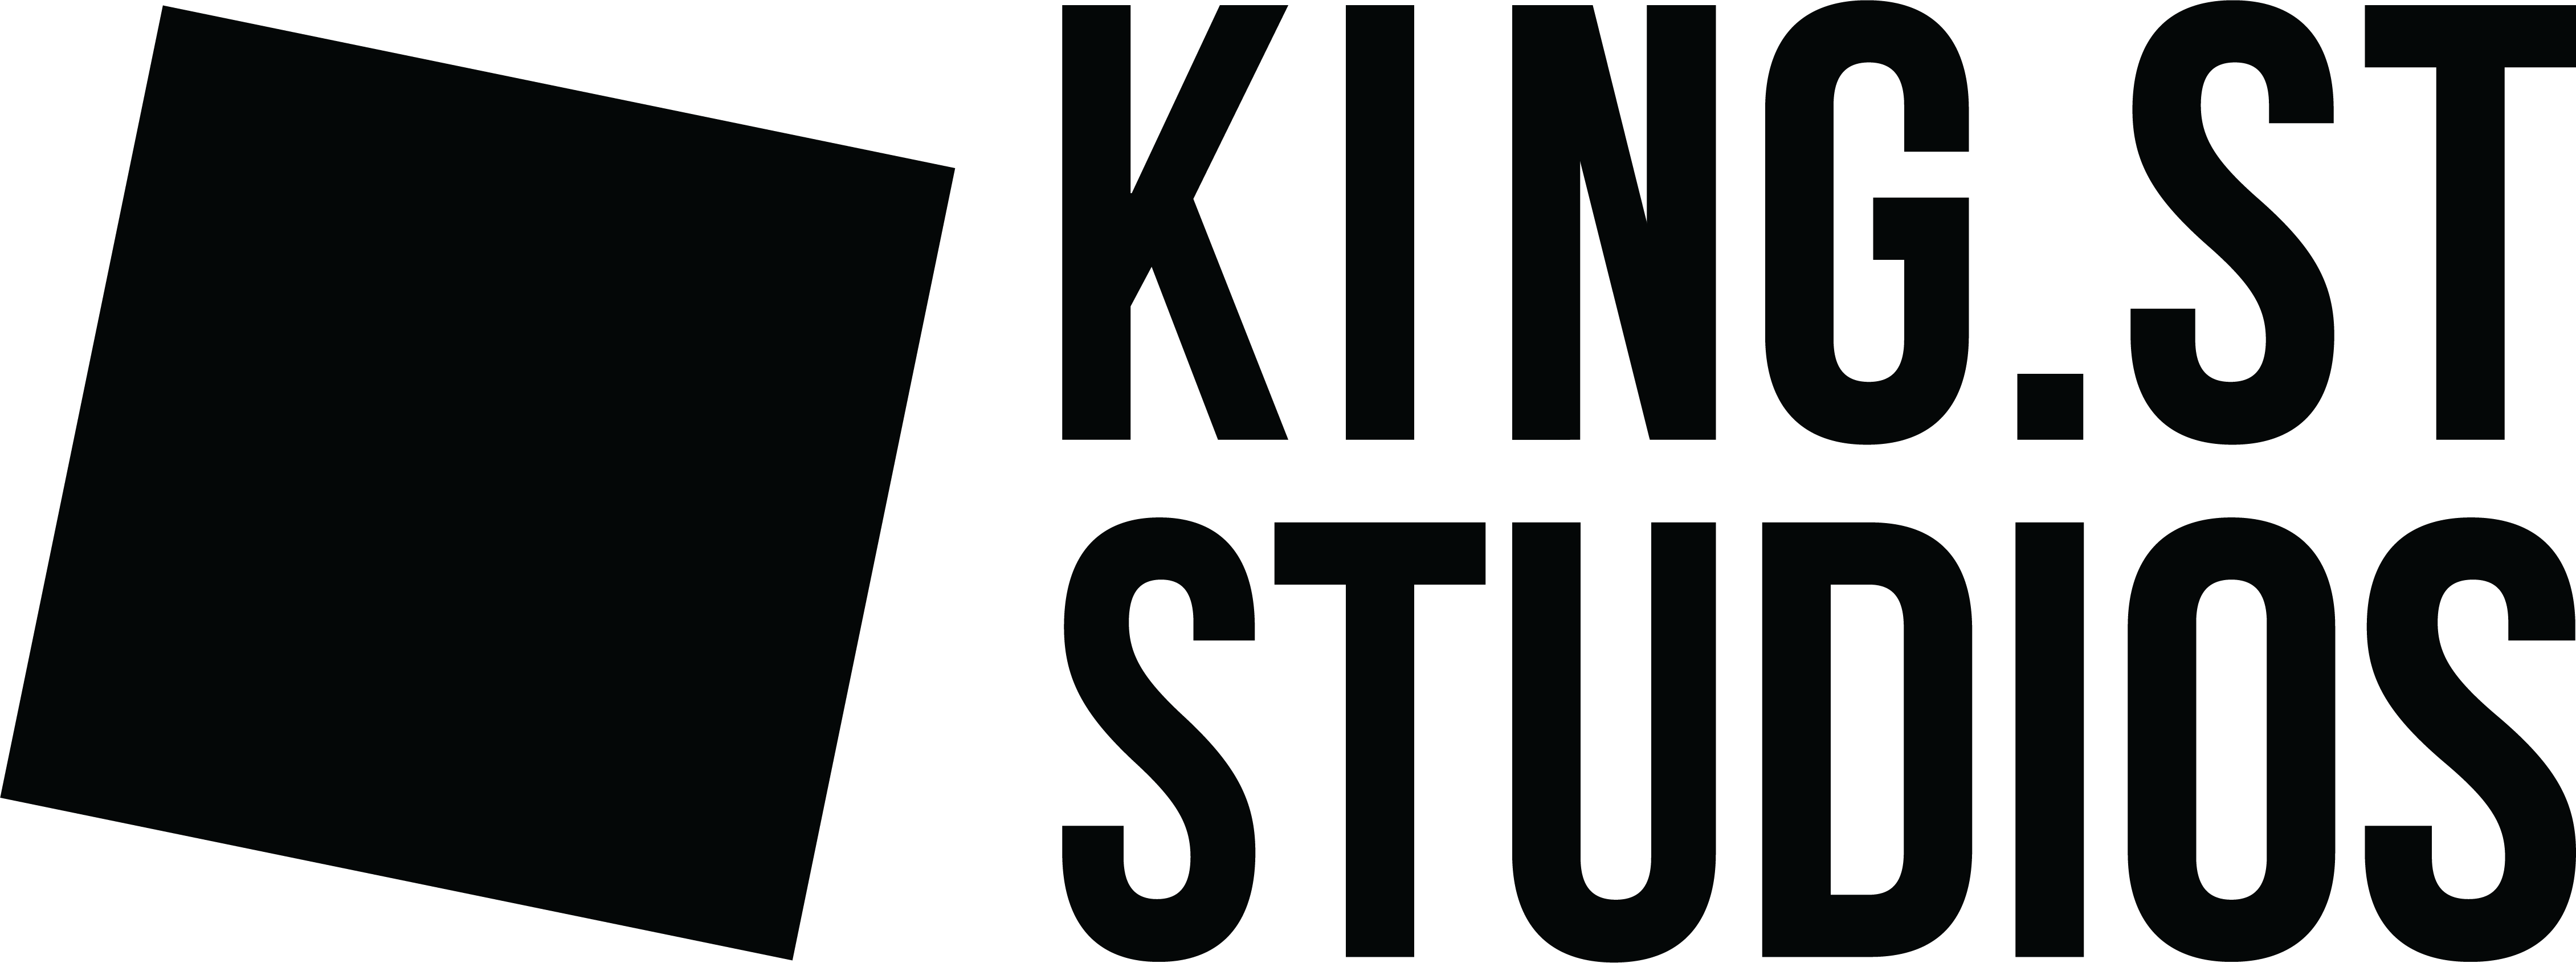 KING STREET STUDIOS